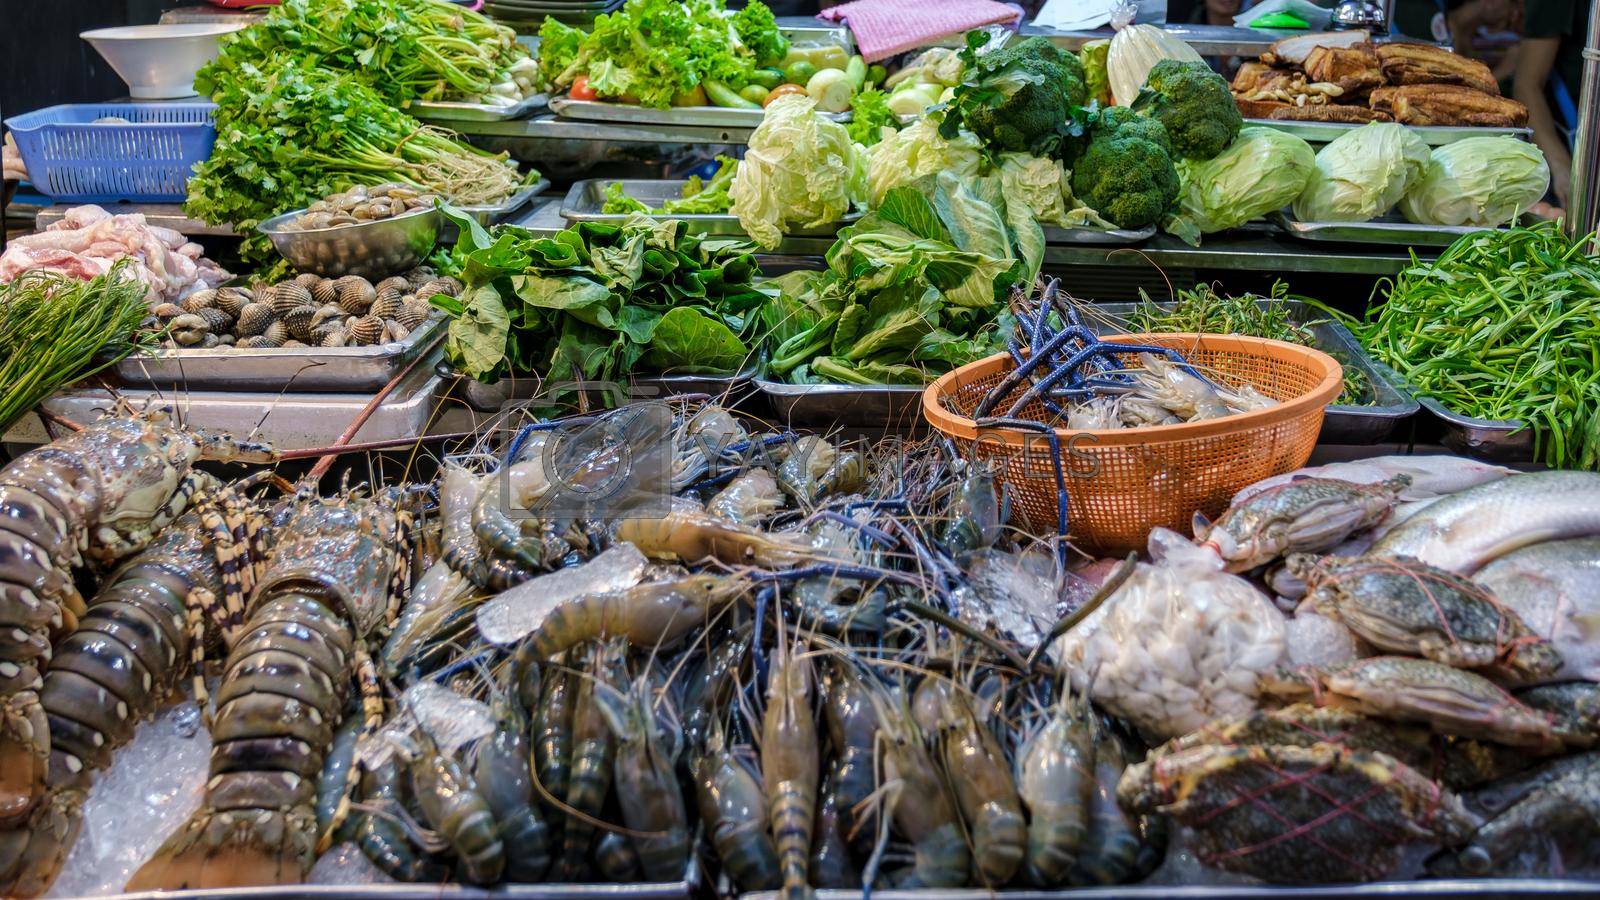 Royalty free image of China town Bangkok Thailand, colroful streets vegetable market with greens and fish Bangkok by fokkebok